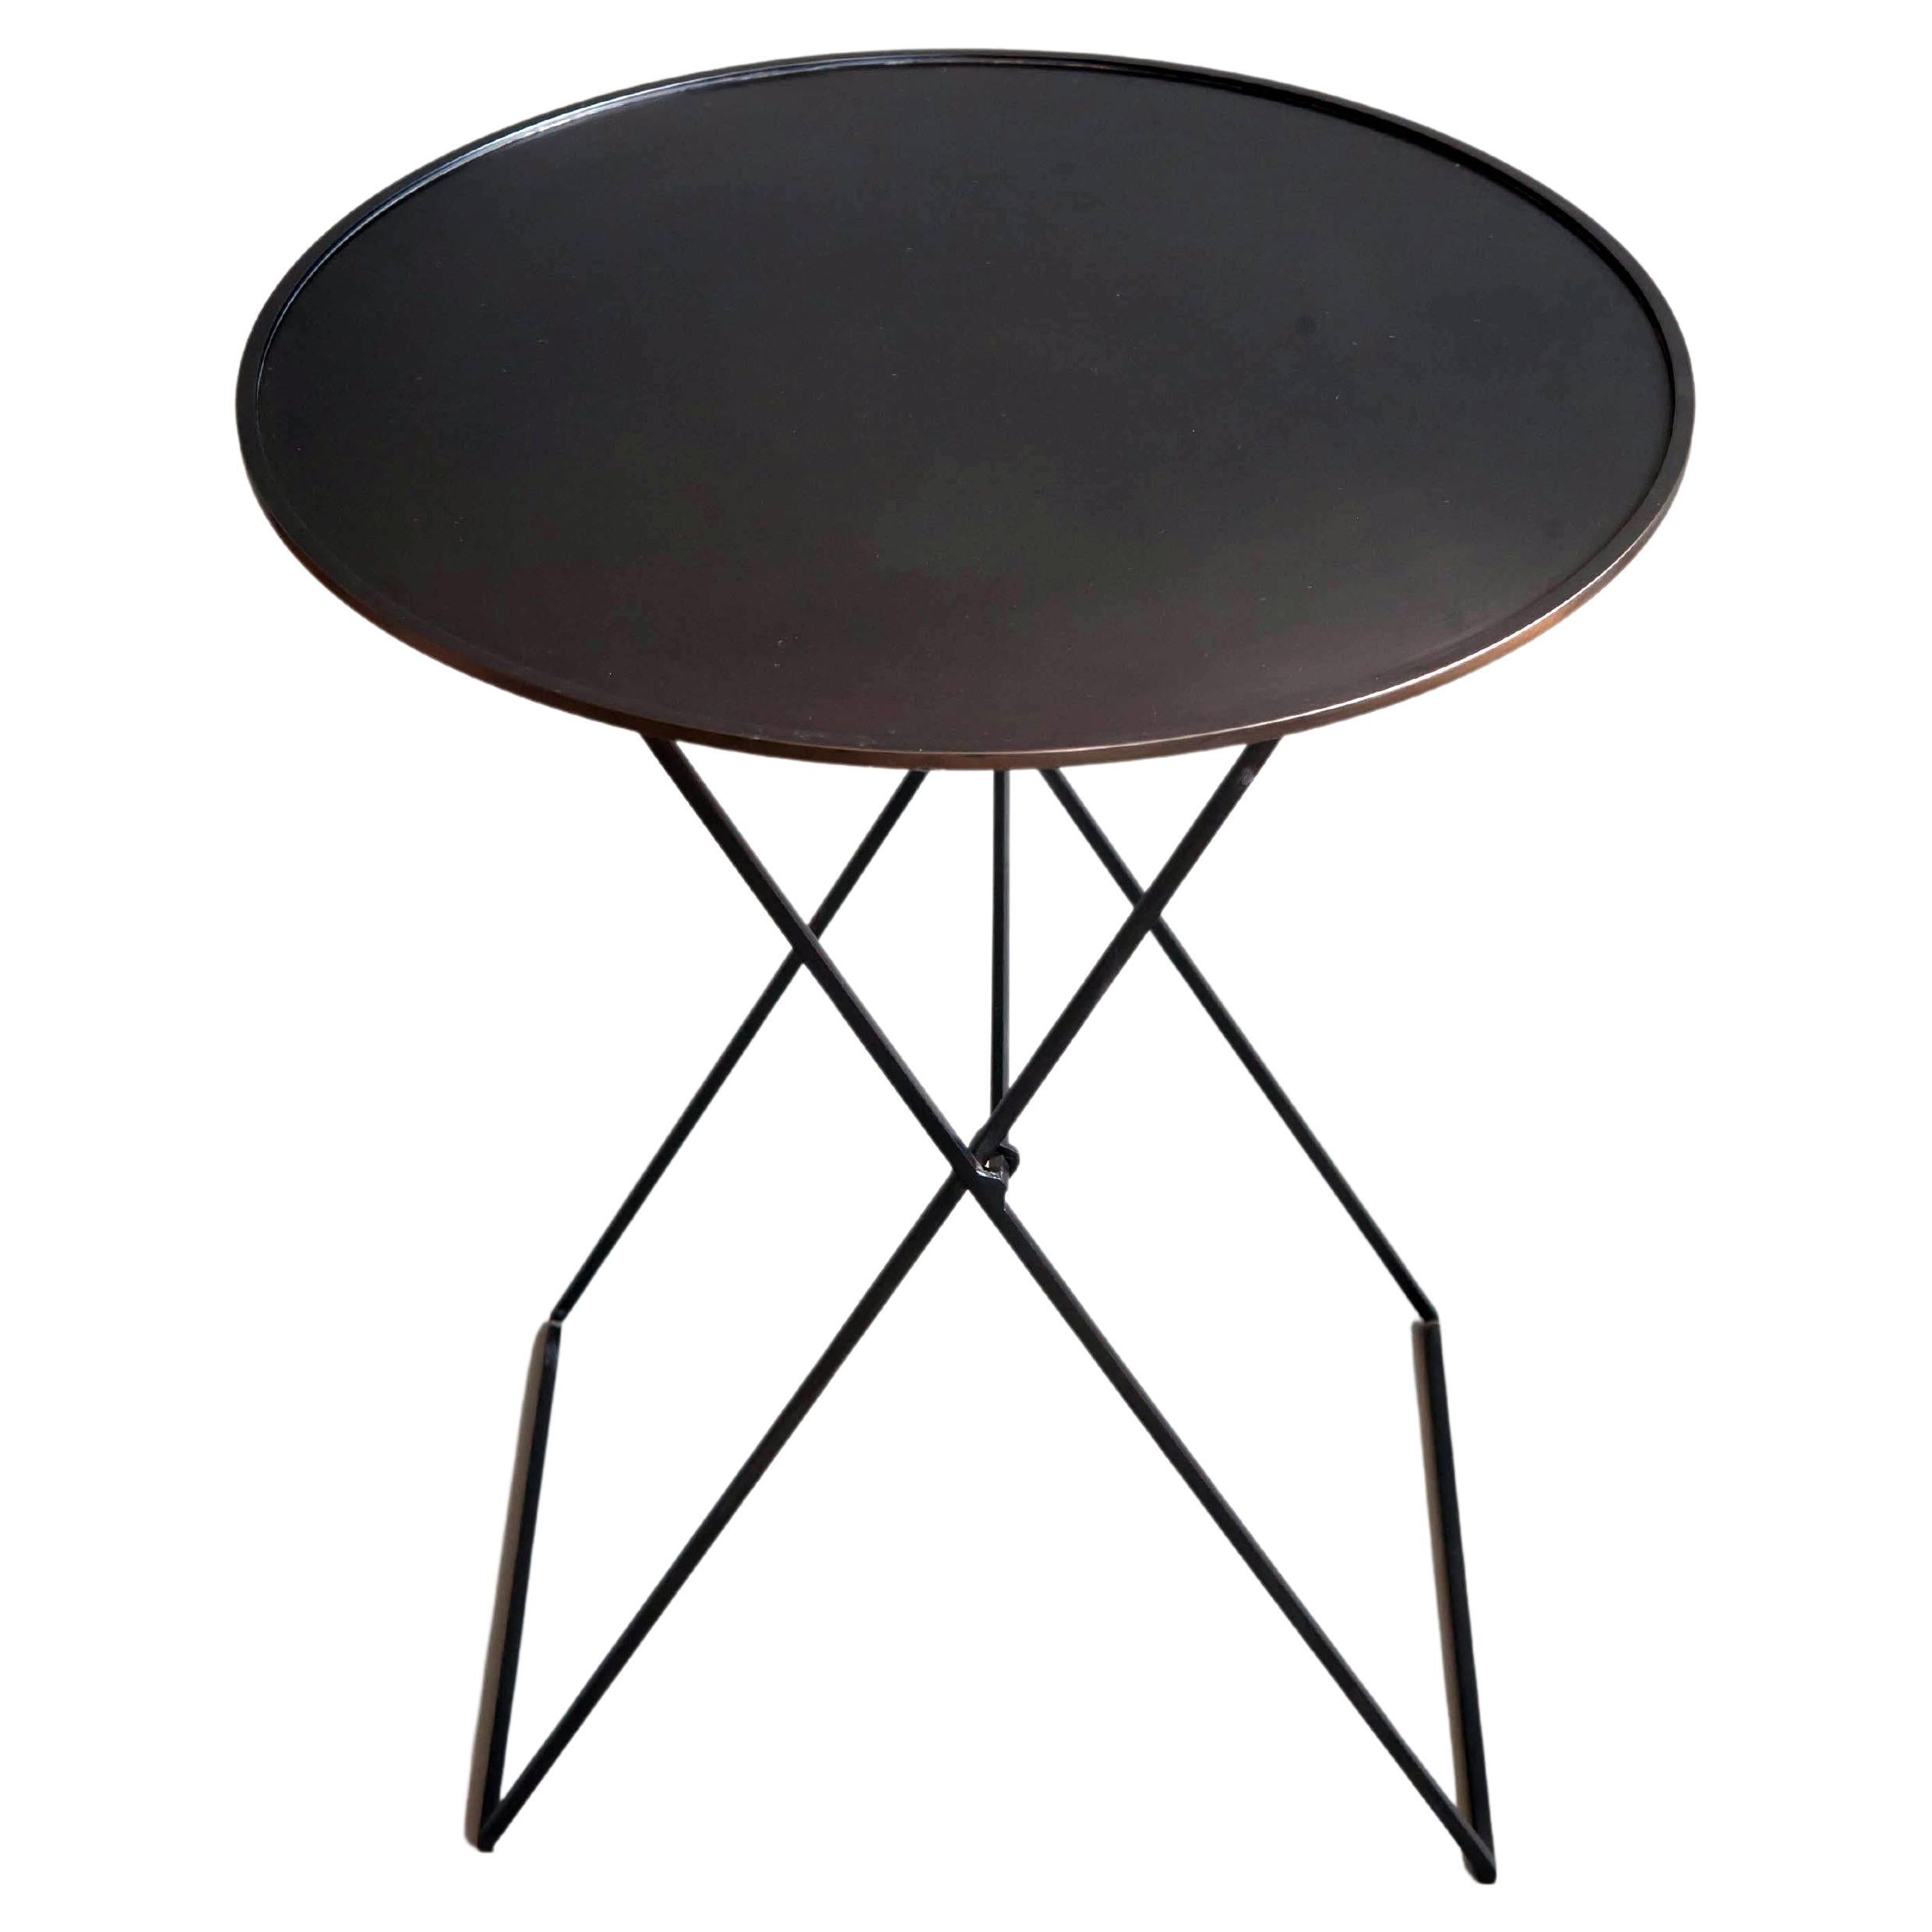 Table d'appoint pliante en métal bronze noir ITO par Soraya Osorio